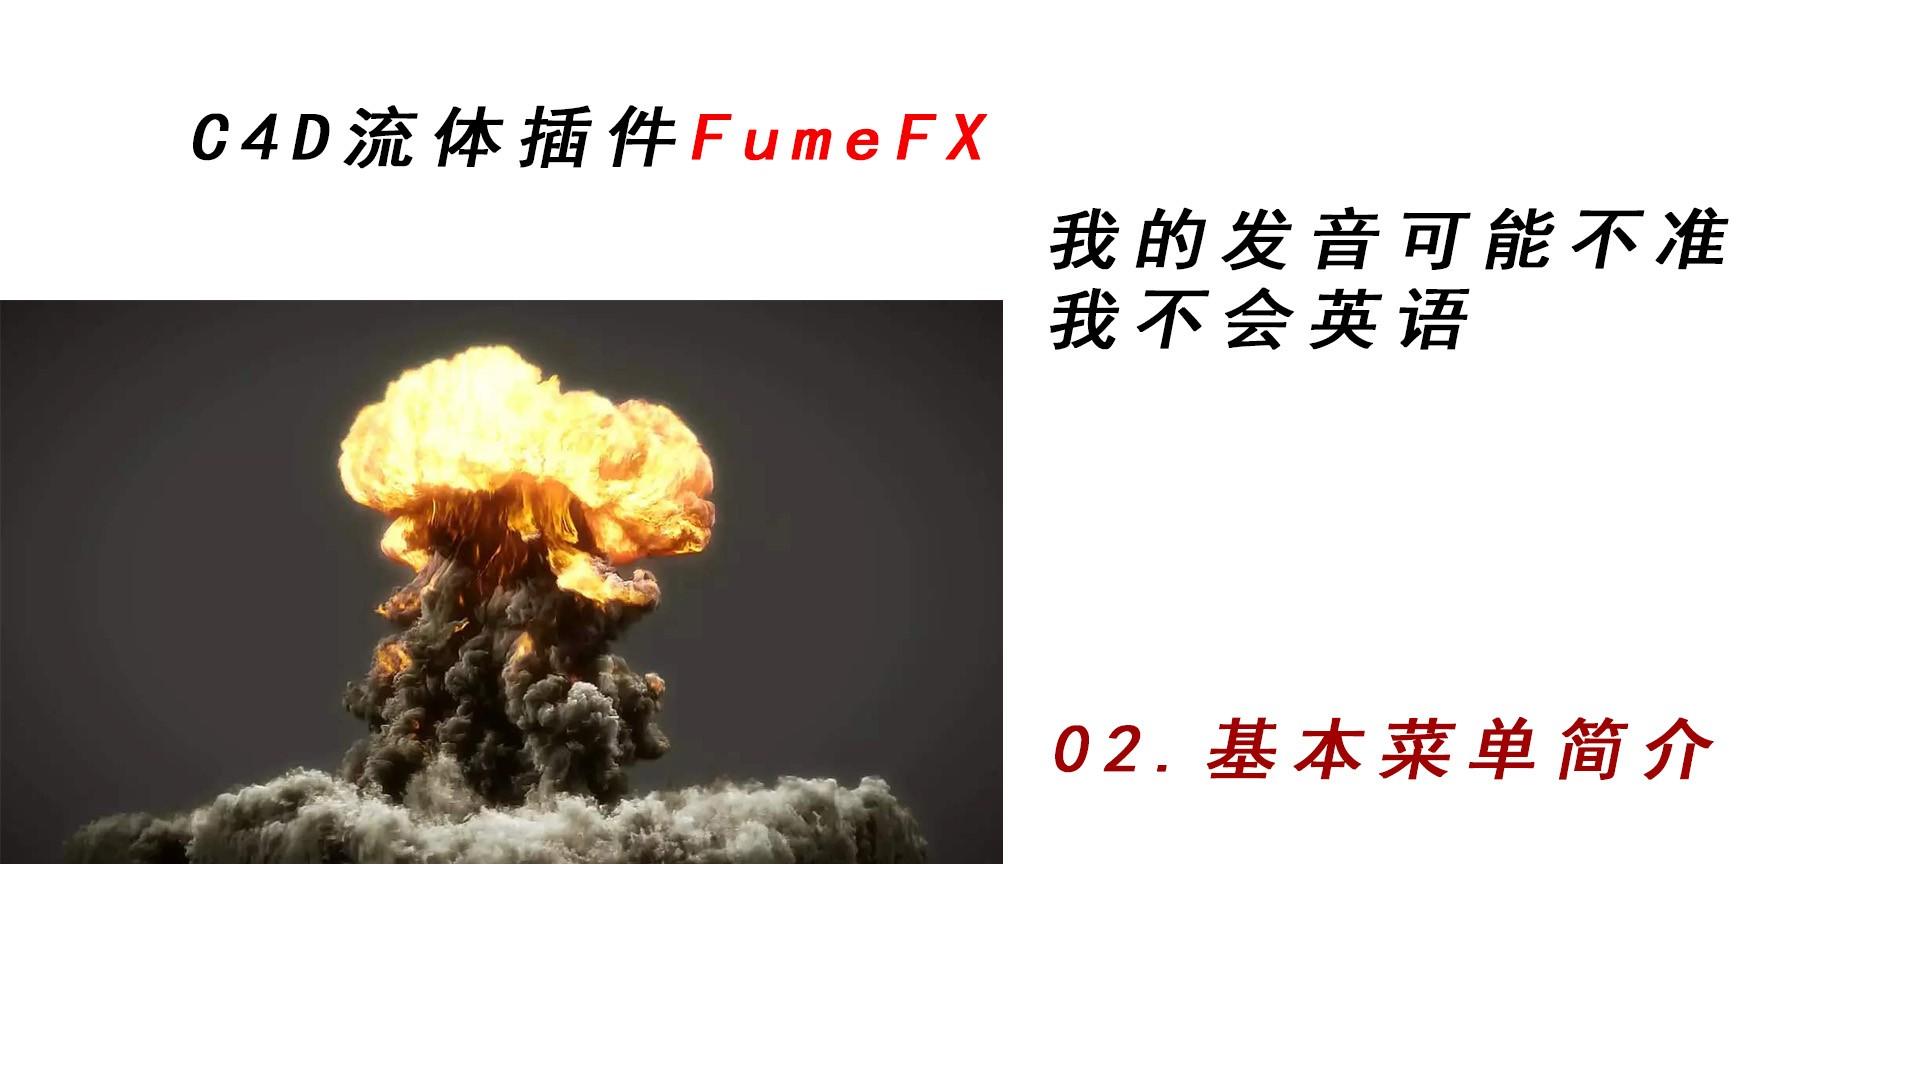 02.FUMEFX基本菜单简介（C4D流体插件）